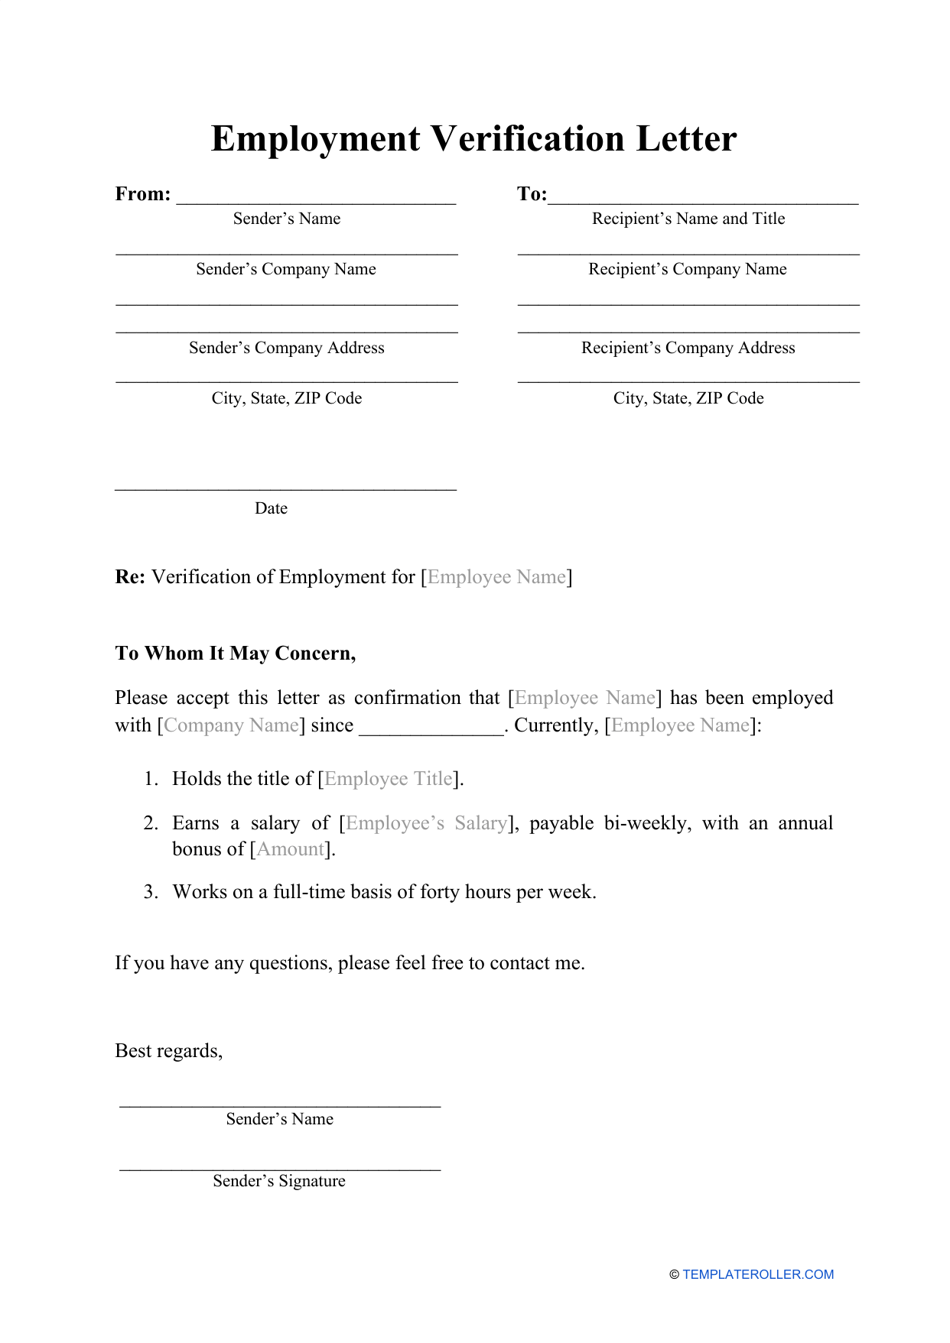 employment verification letter template download printable pdf templateroller